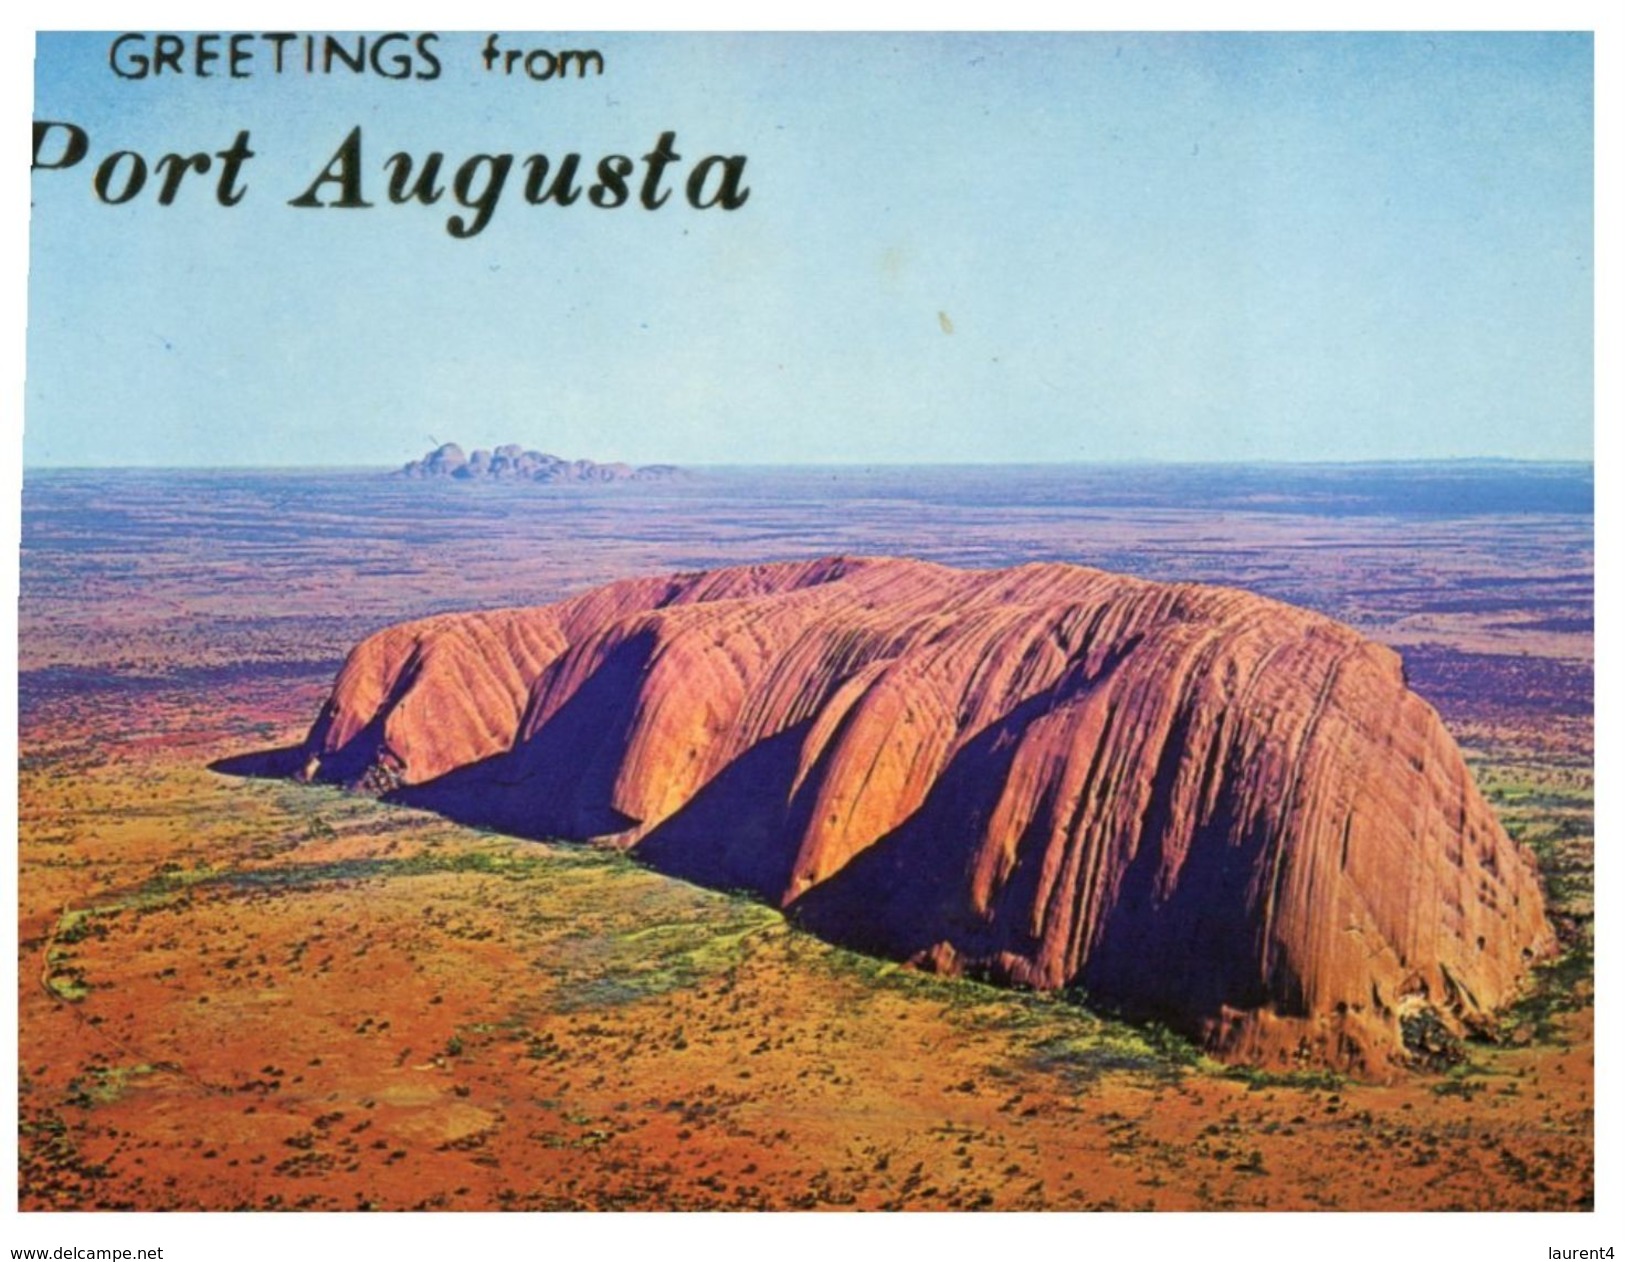 (555) Australia - NT - Uluru / Ayers Rock (but Card Wrongly Says: Greeting From Port Augusta - SA) - Uluru & The Olgas